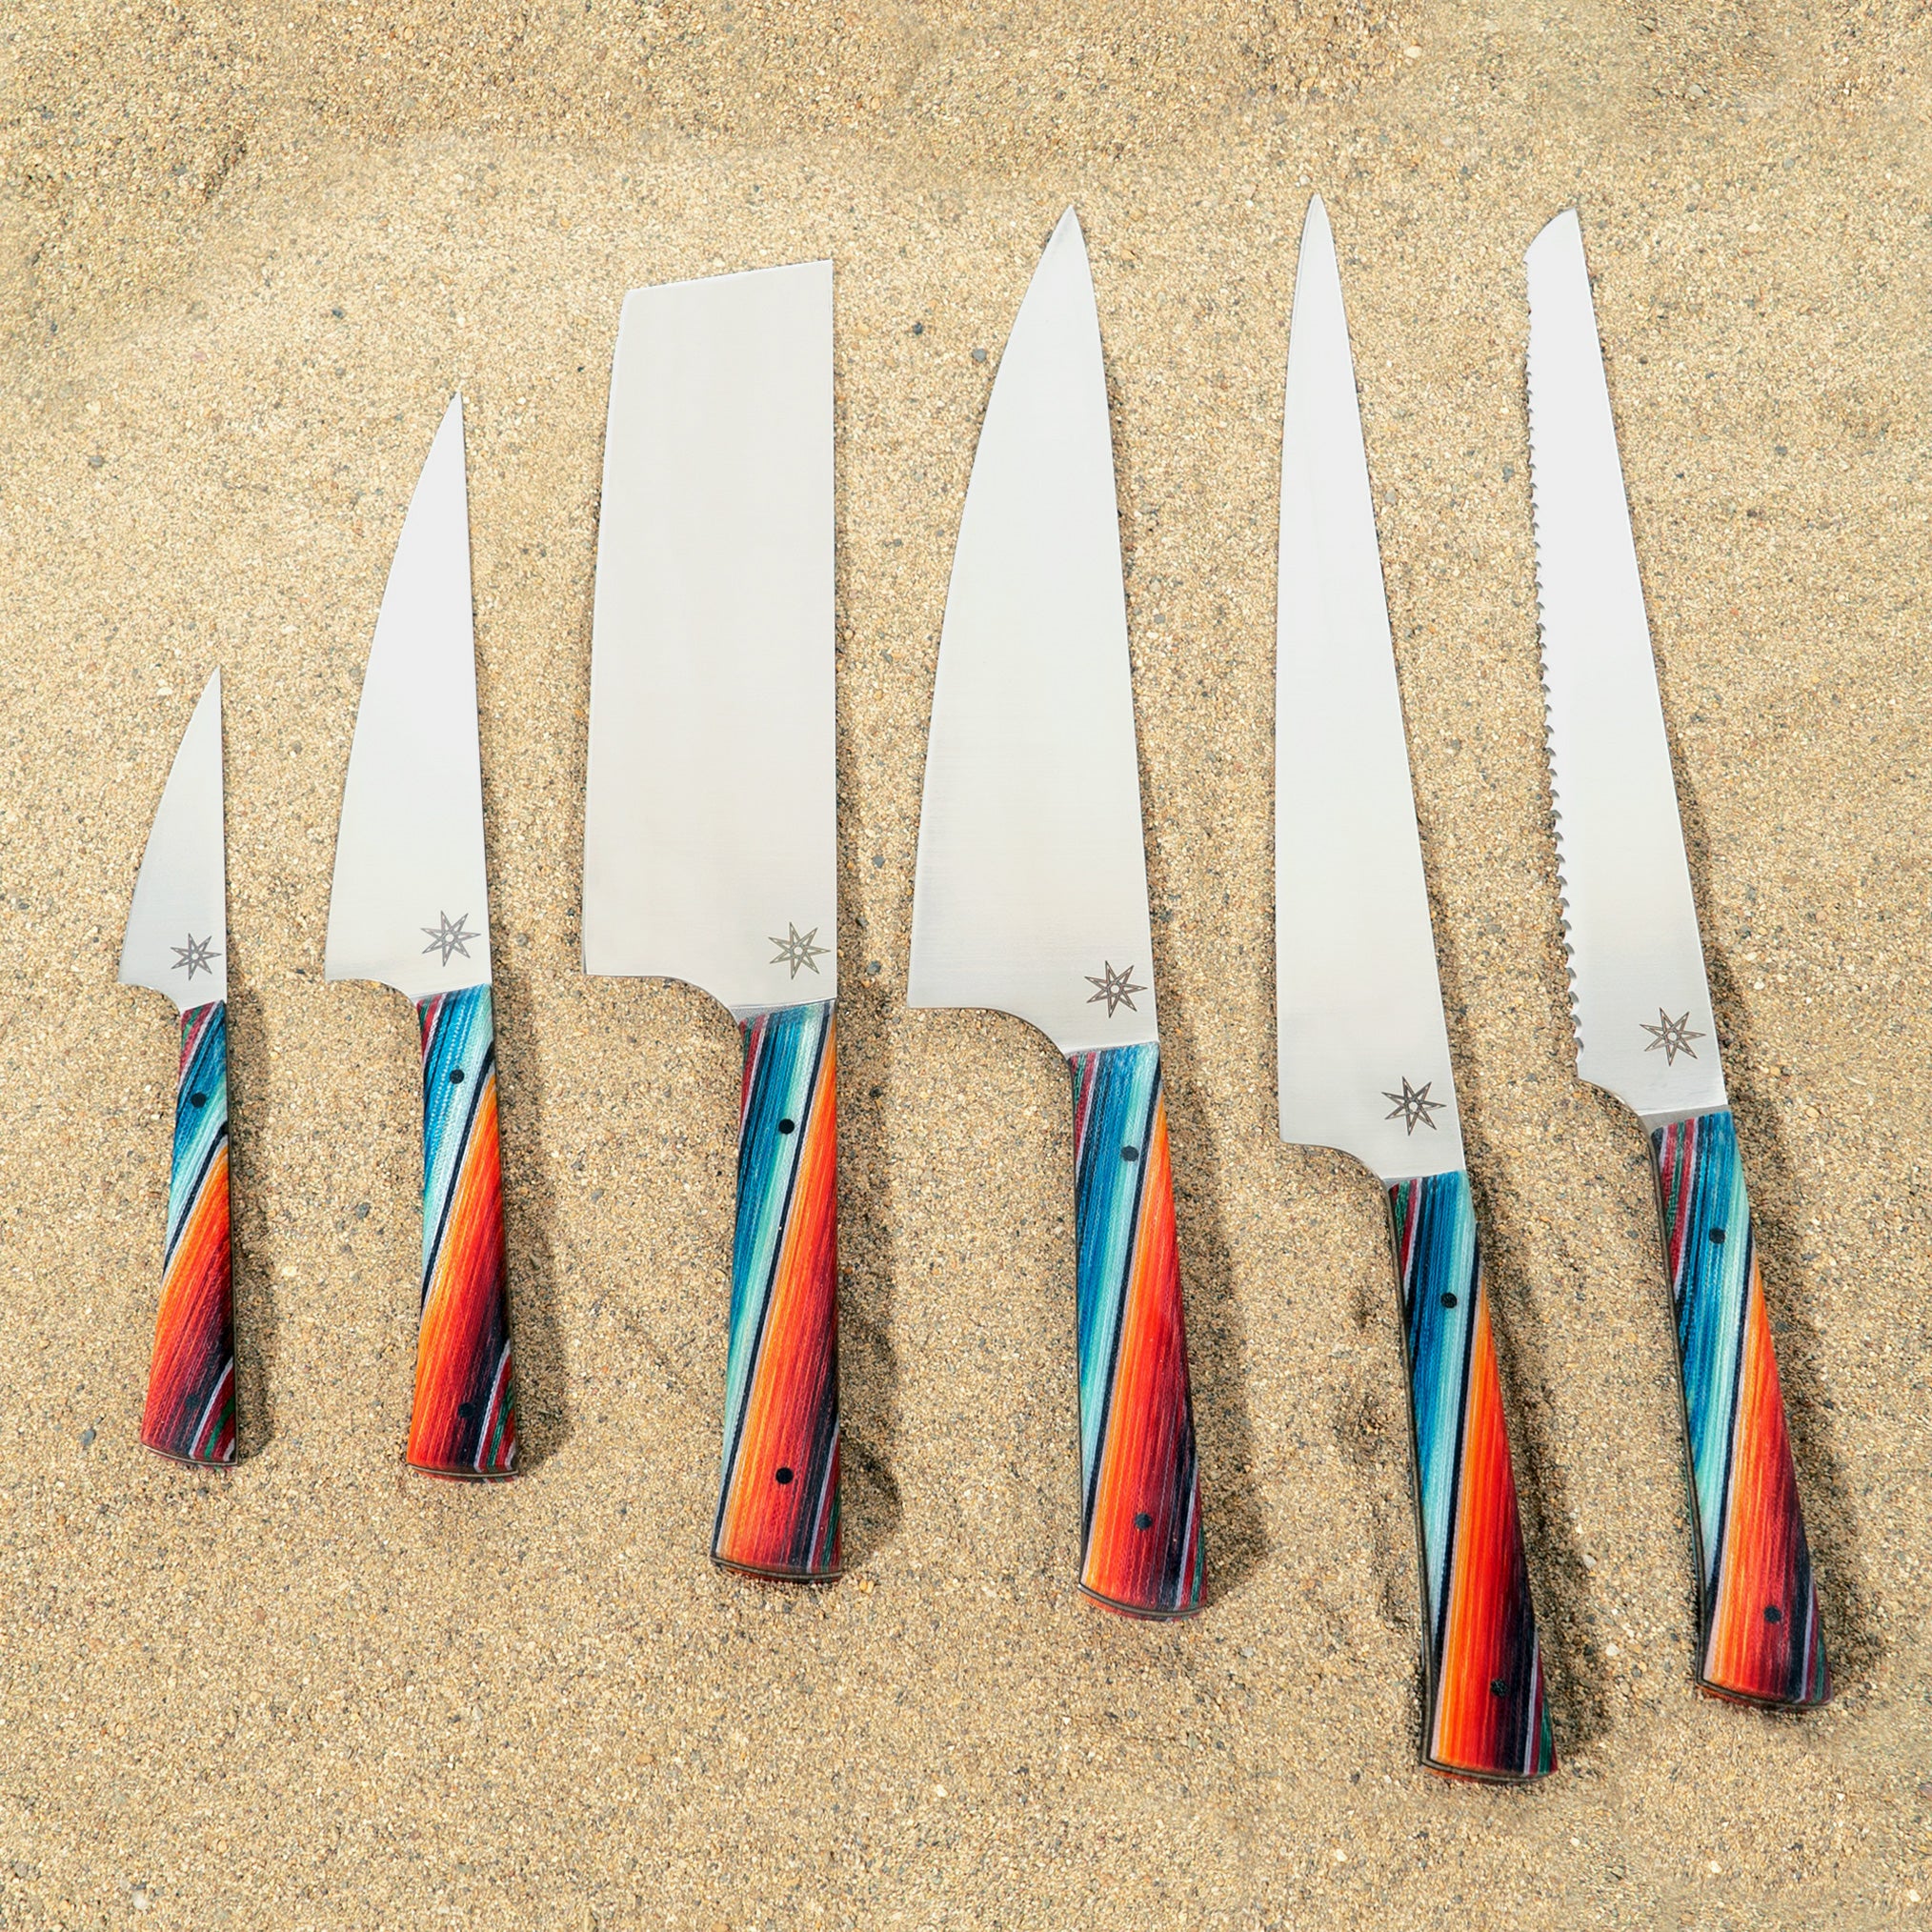 The Essentials Knife Set - Baja